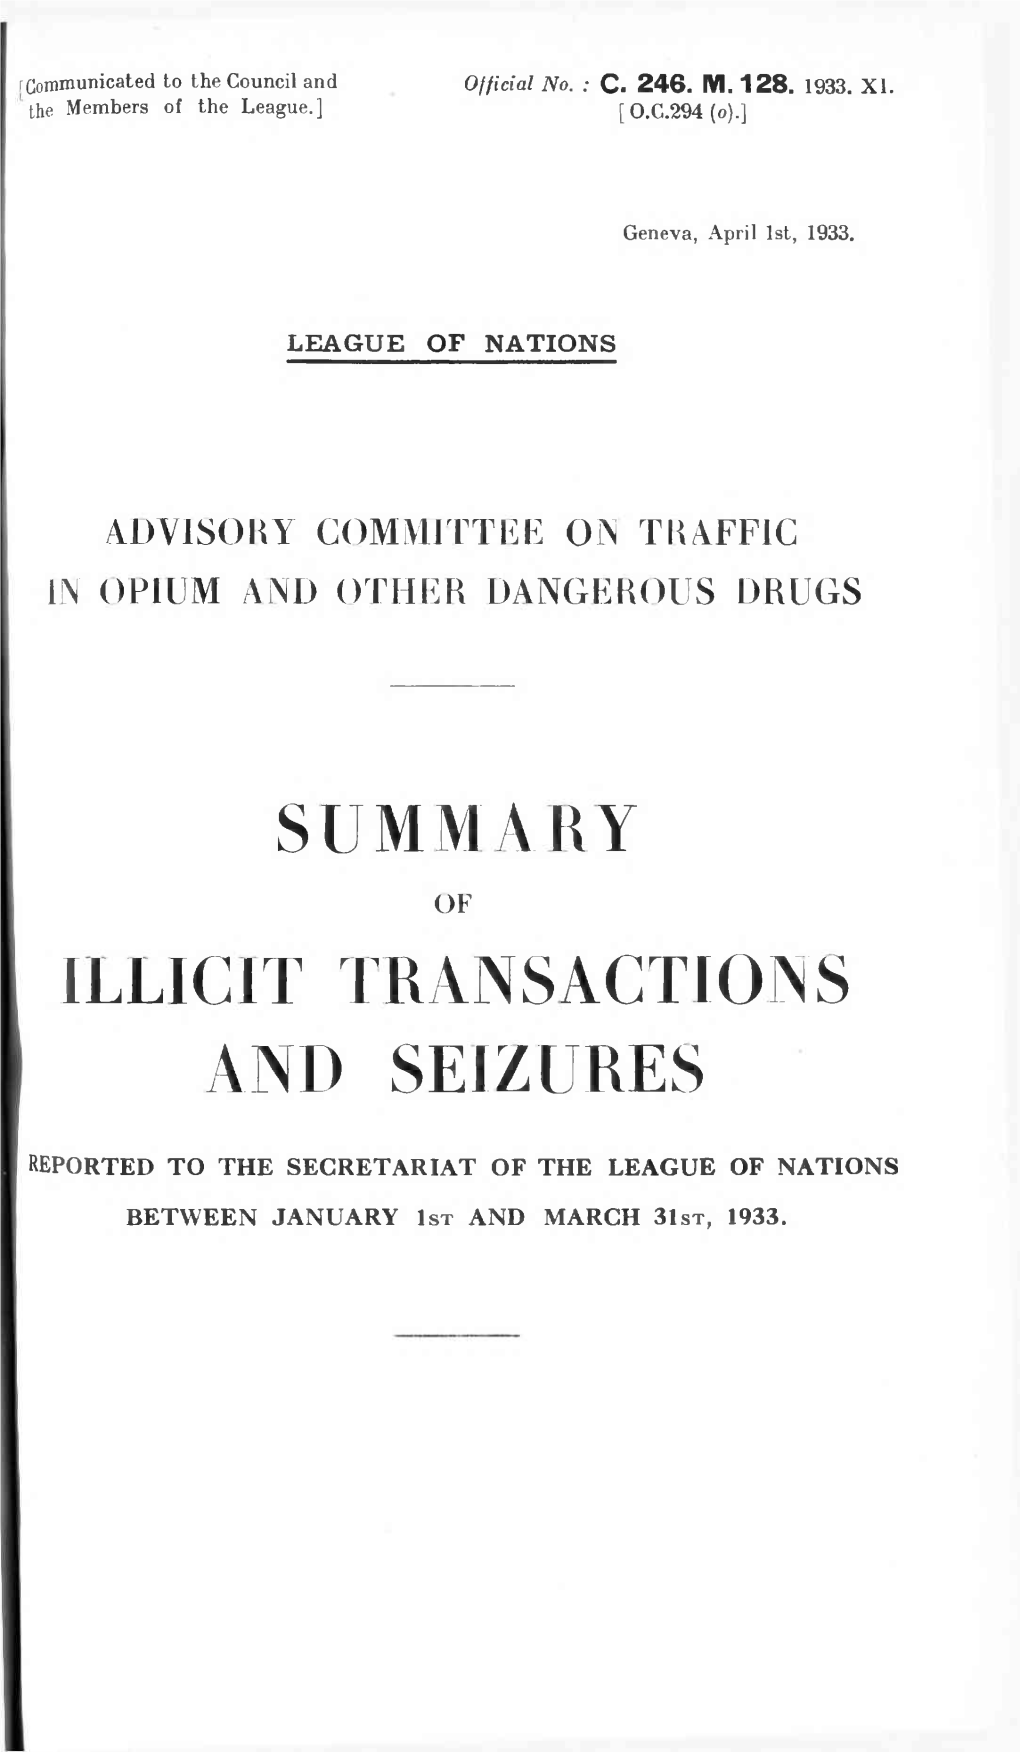 Summary Illicit Transactions and Seizures